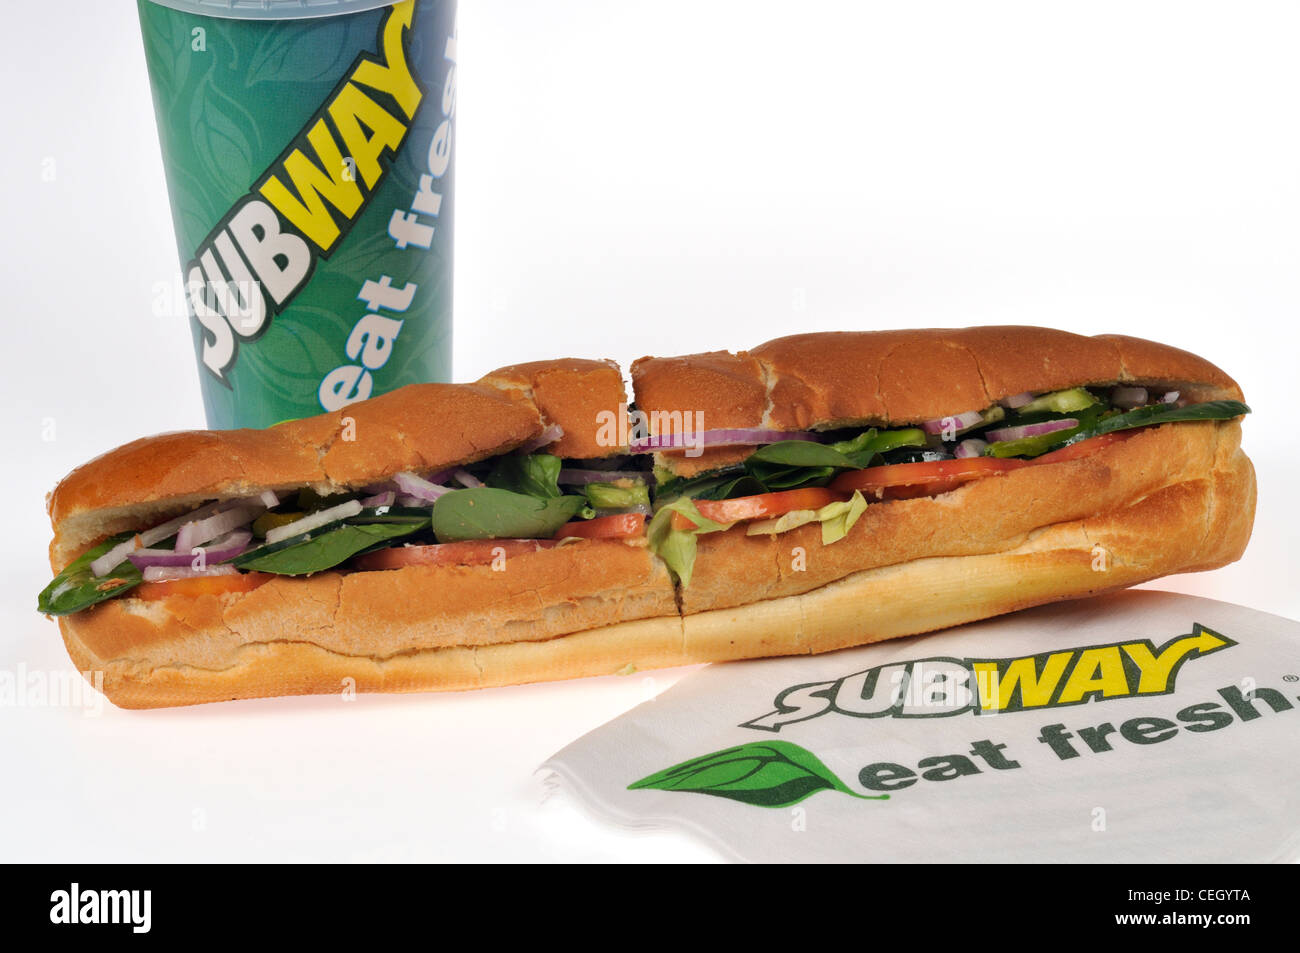 Subway Veggie delite footlong submarine sandwich with beverage on white background USA Stock Photo